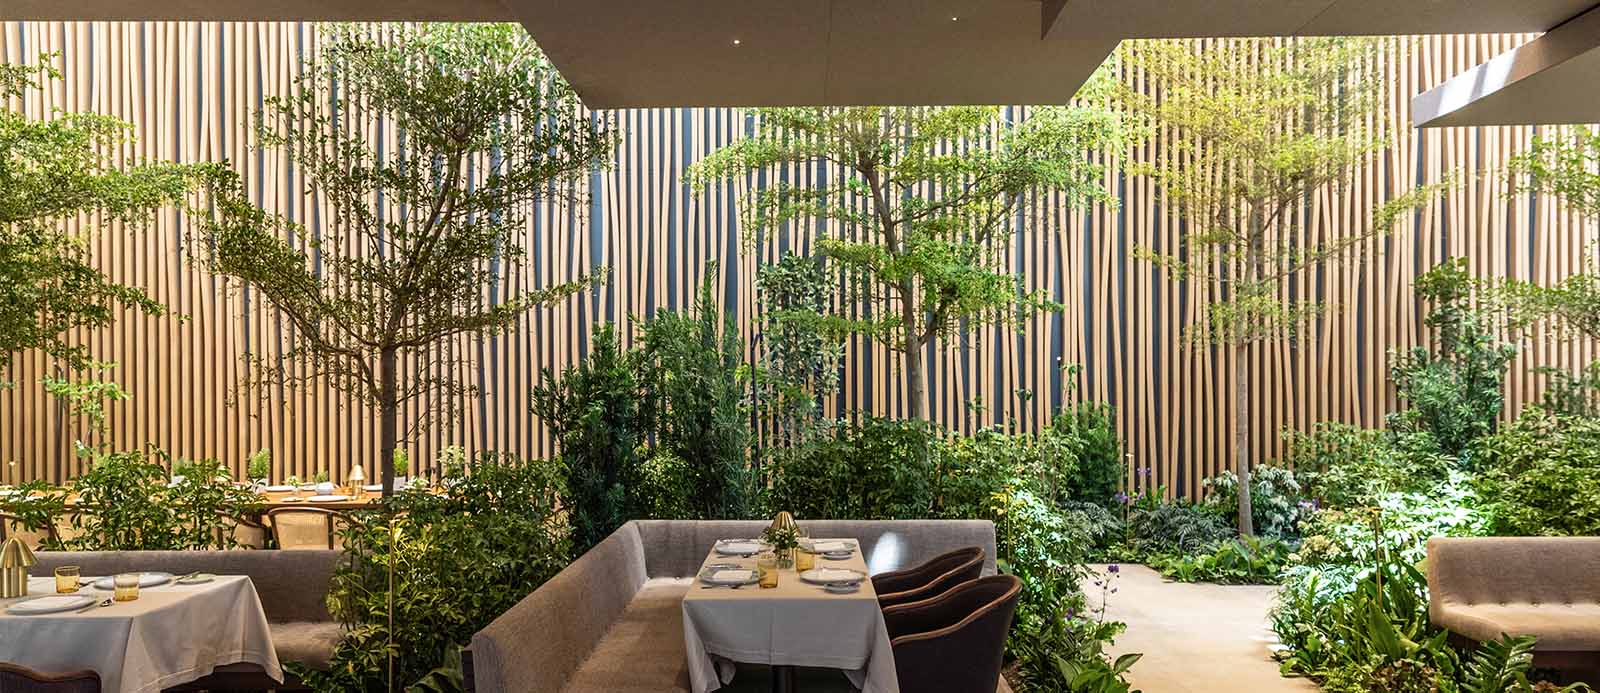 Michelin-Star Chef Daniel Boulud Debuts 'Le Pavillon' at One Vanderbilt in  Midtown, Manhattan - New York YIMBY